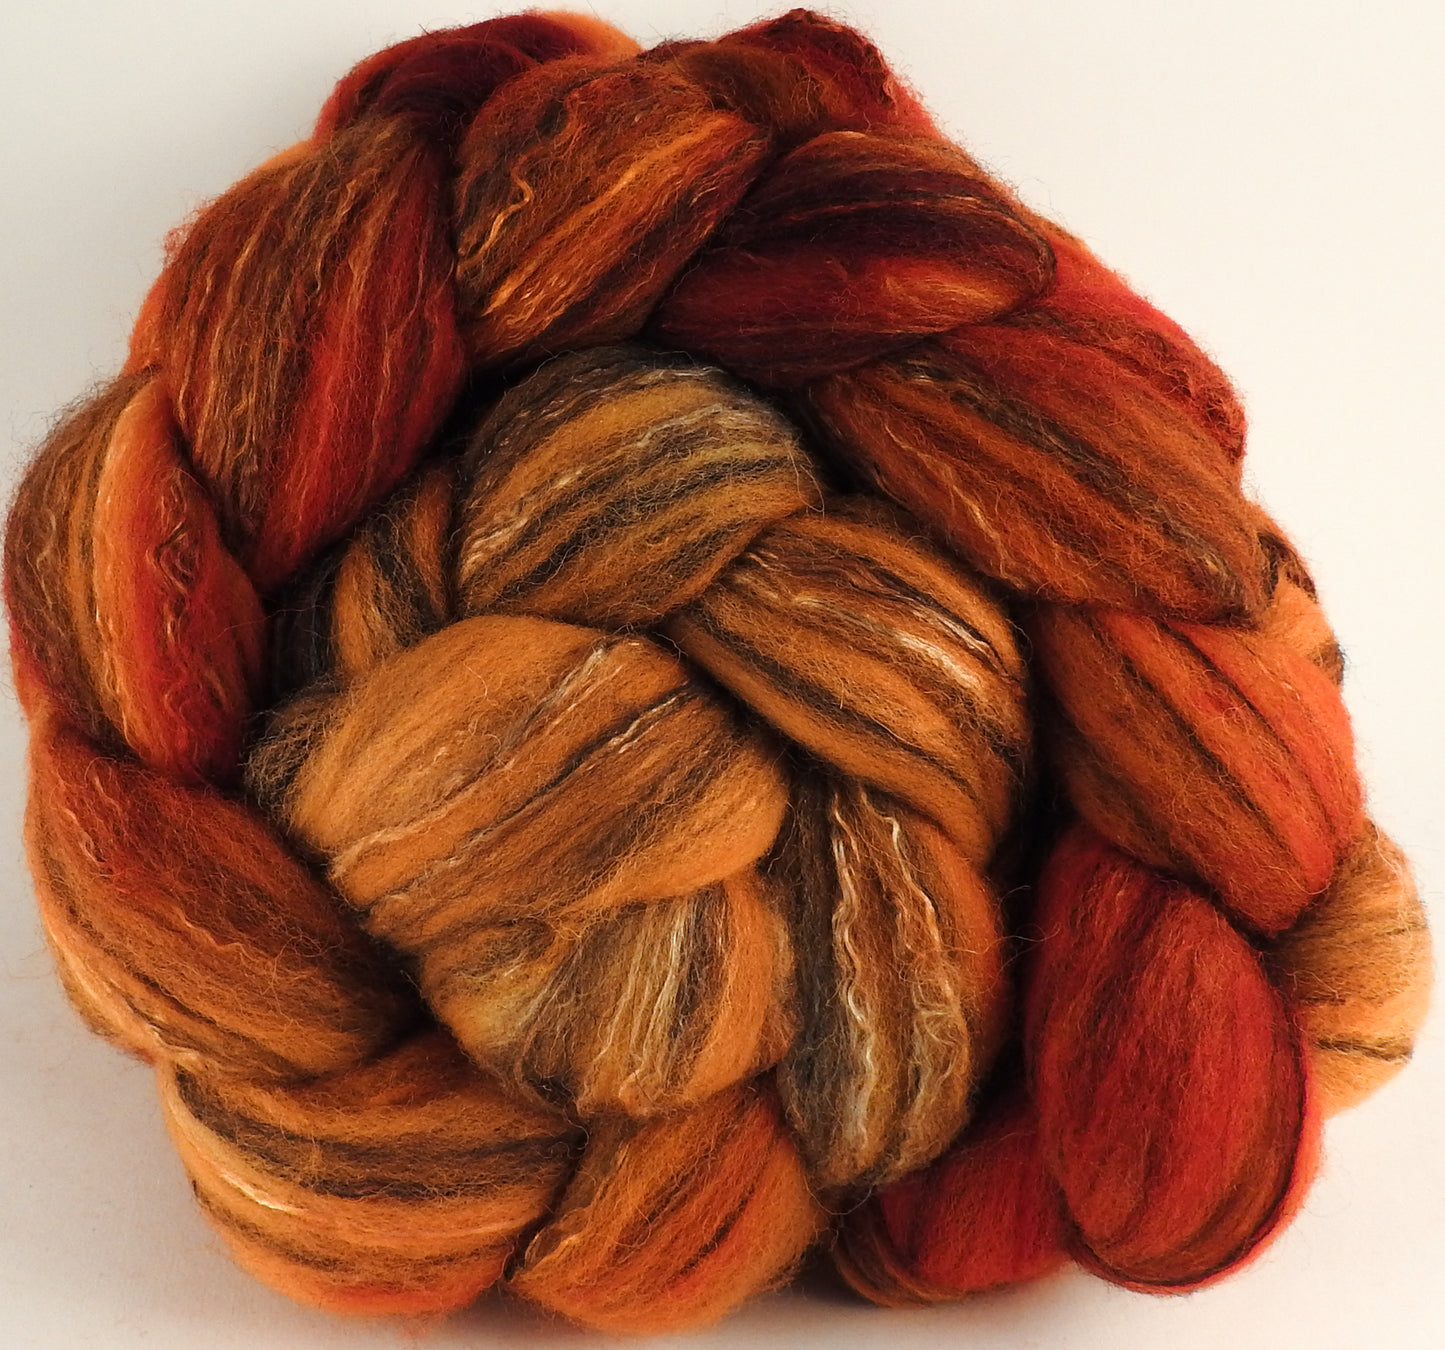 Batt in a Braid #30-  Kumquat (5.3 oz.) - Charollais/ Rambouillet / Black tussah /Mulberry silk (40/40/10/10) - Inglenook Fibers